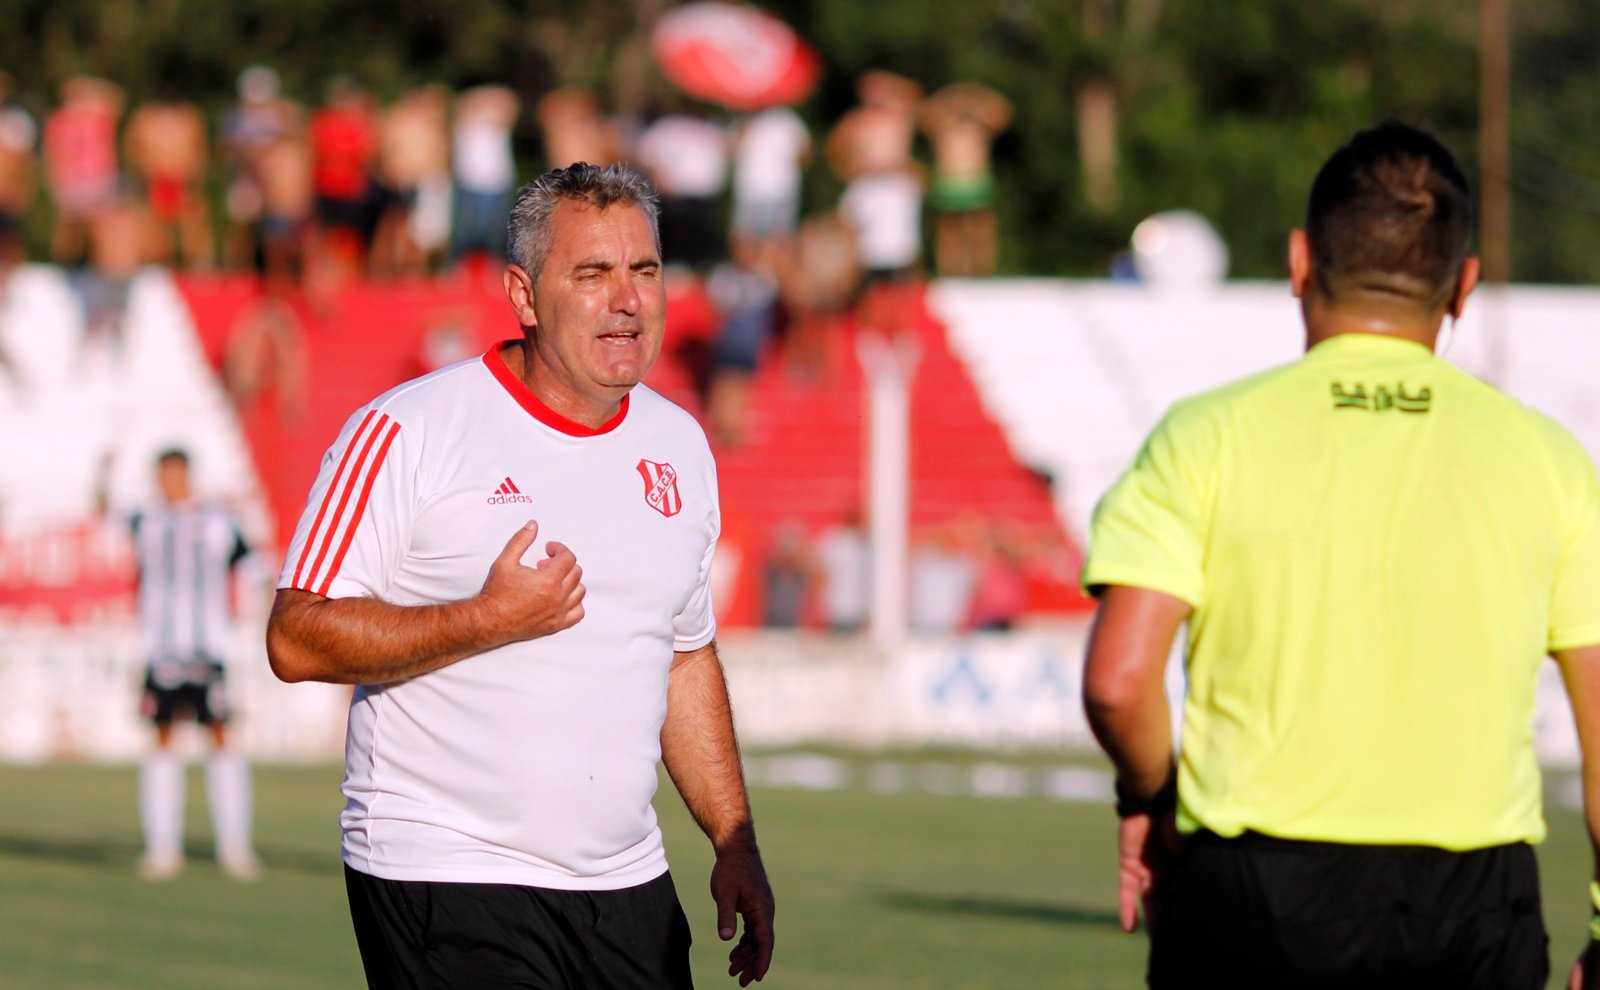 Murió quien fuera técnico de Costa Brava, José Edgardo “Topo” González